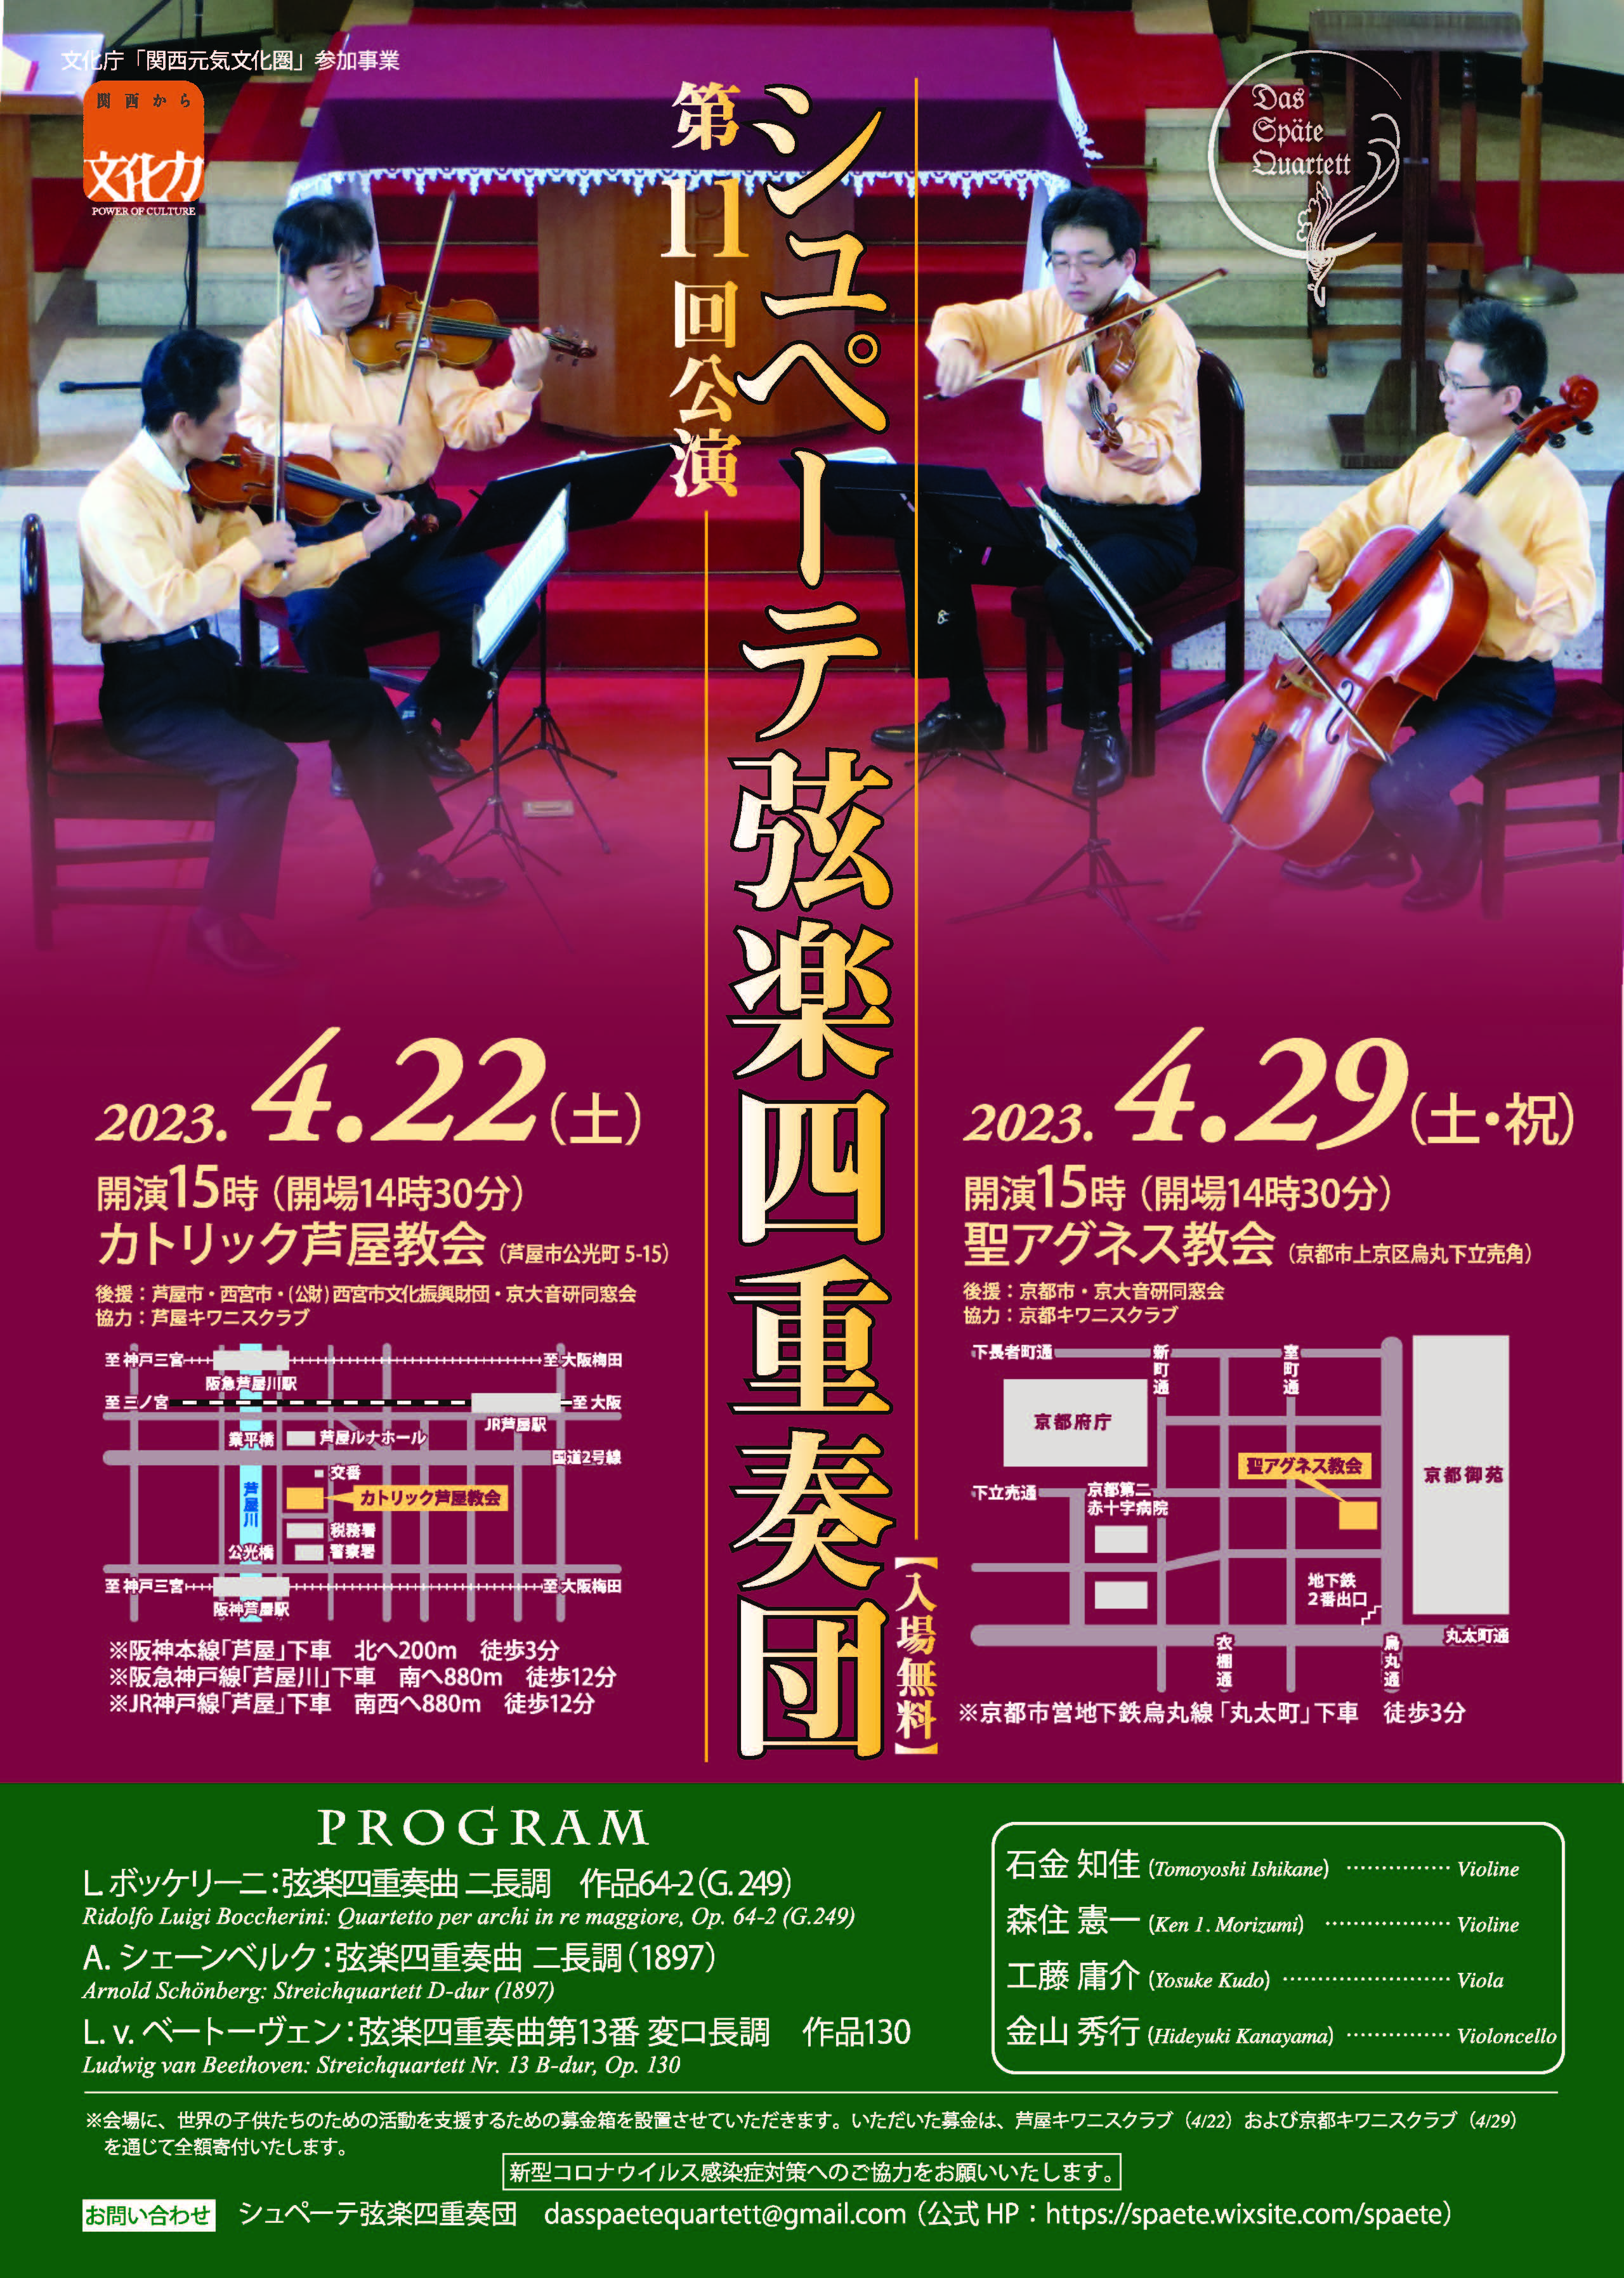 SPEETE String Quartet 11th Concert (Kyoto, Japan)